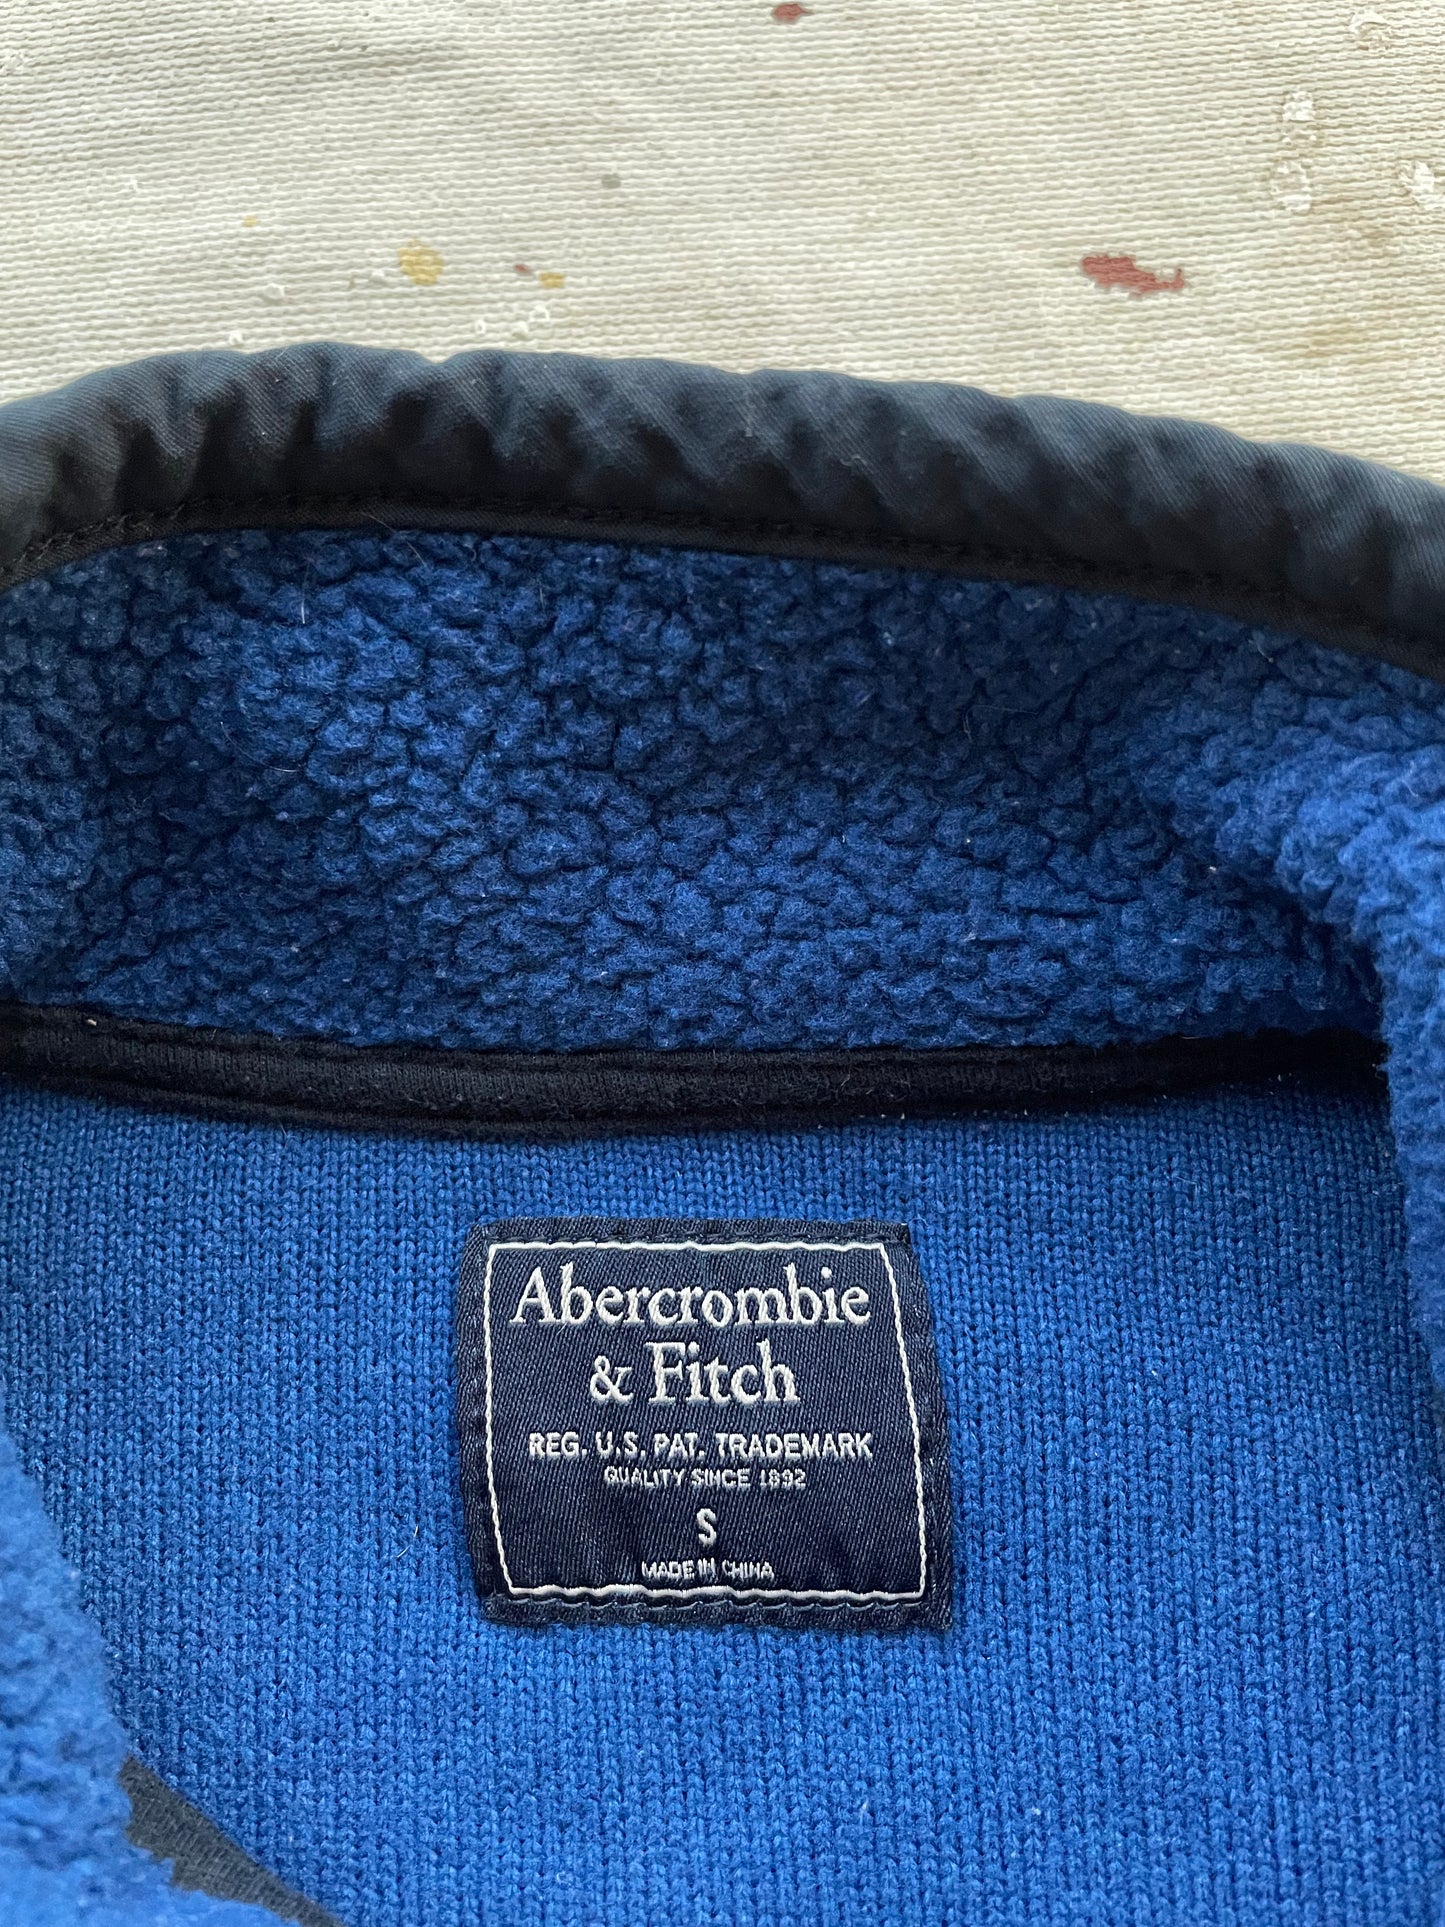 Abercrombie & Fitch Snap-T Fleece—[S/M]